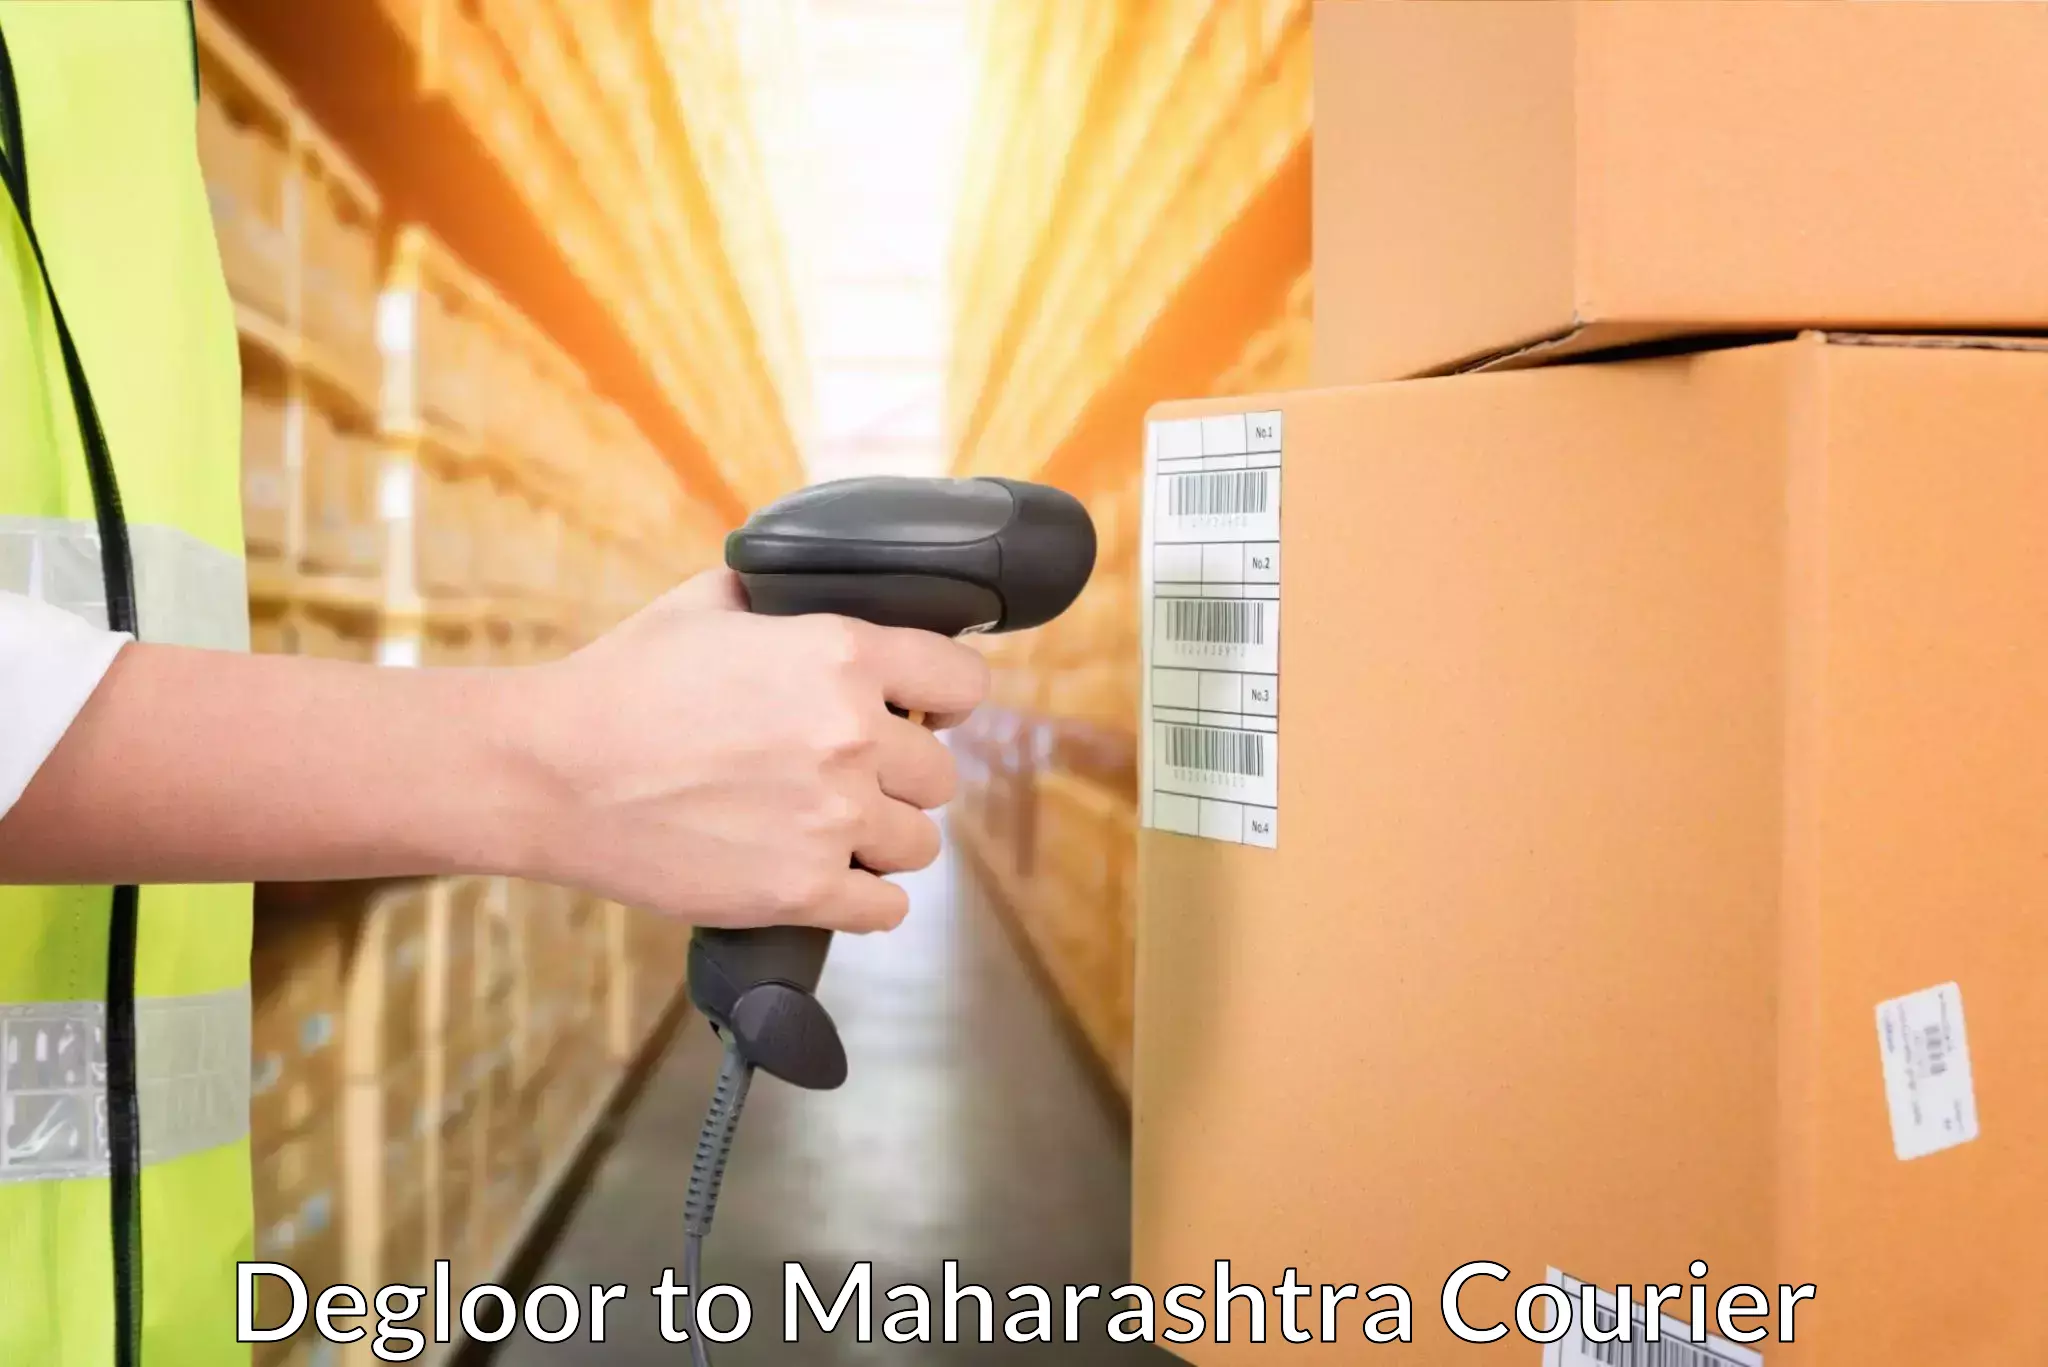 Cargo delivery service Degloor to Jawaharlal Nehru Port Nhava Sheva